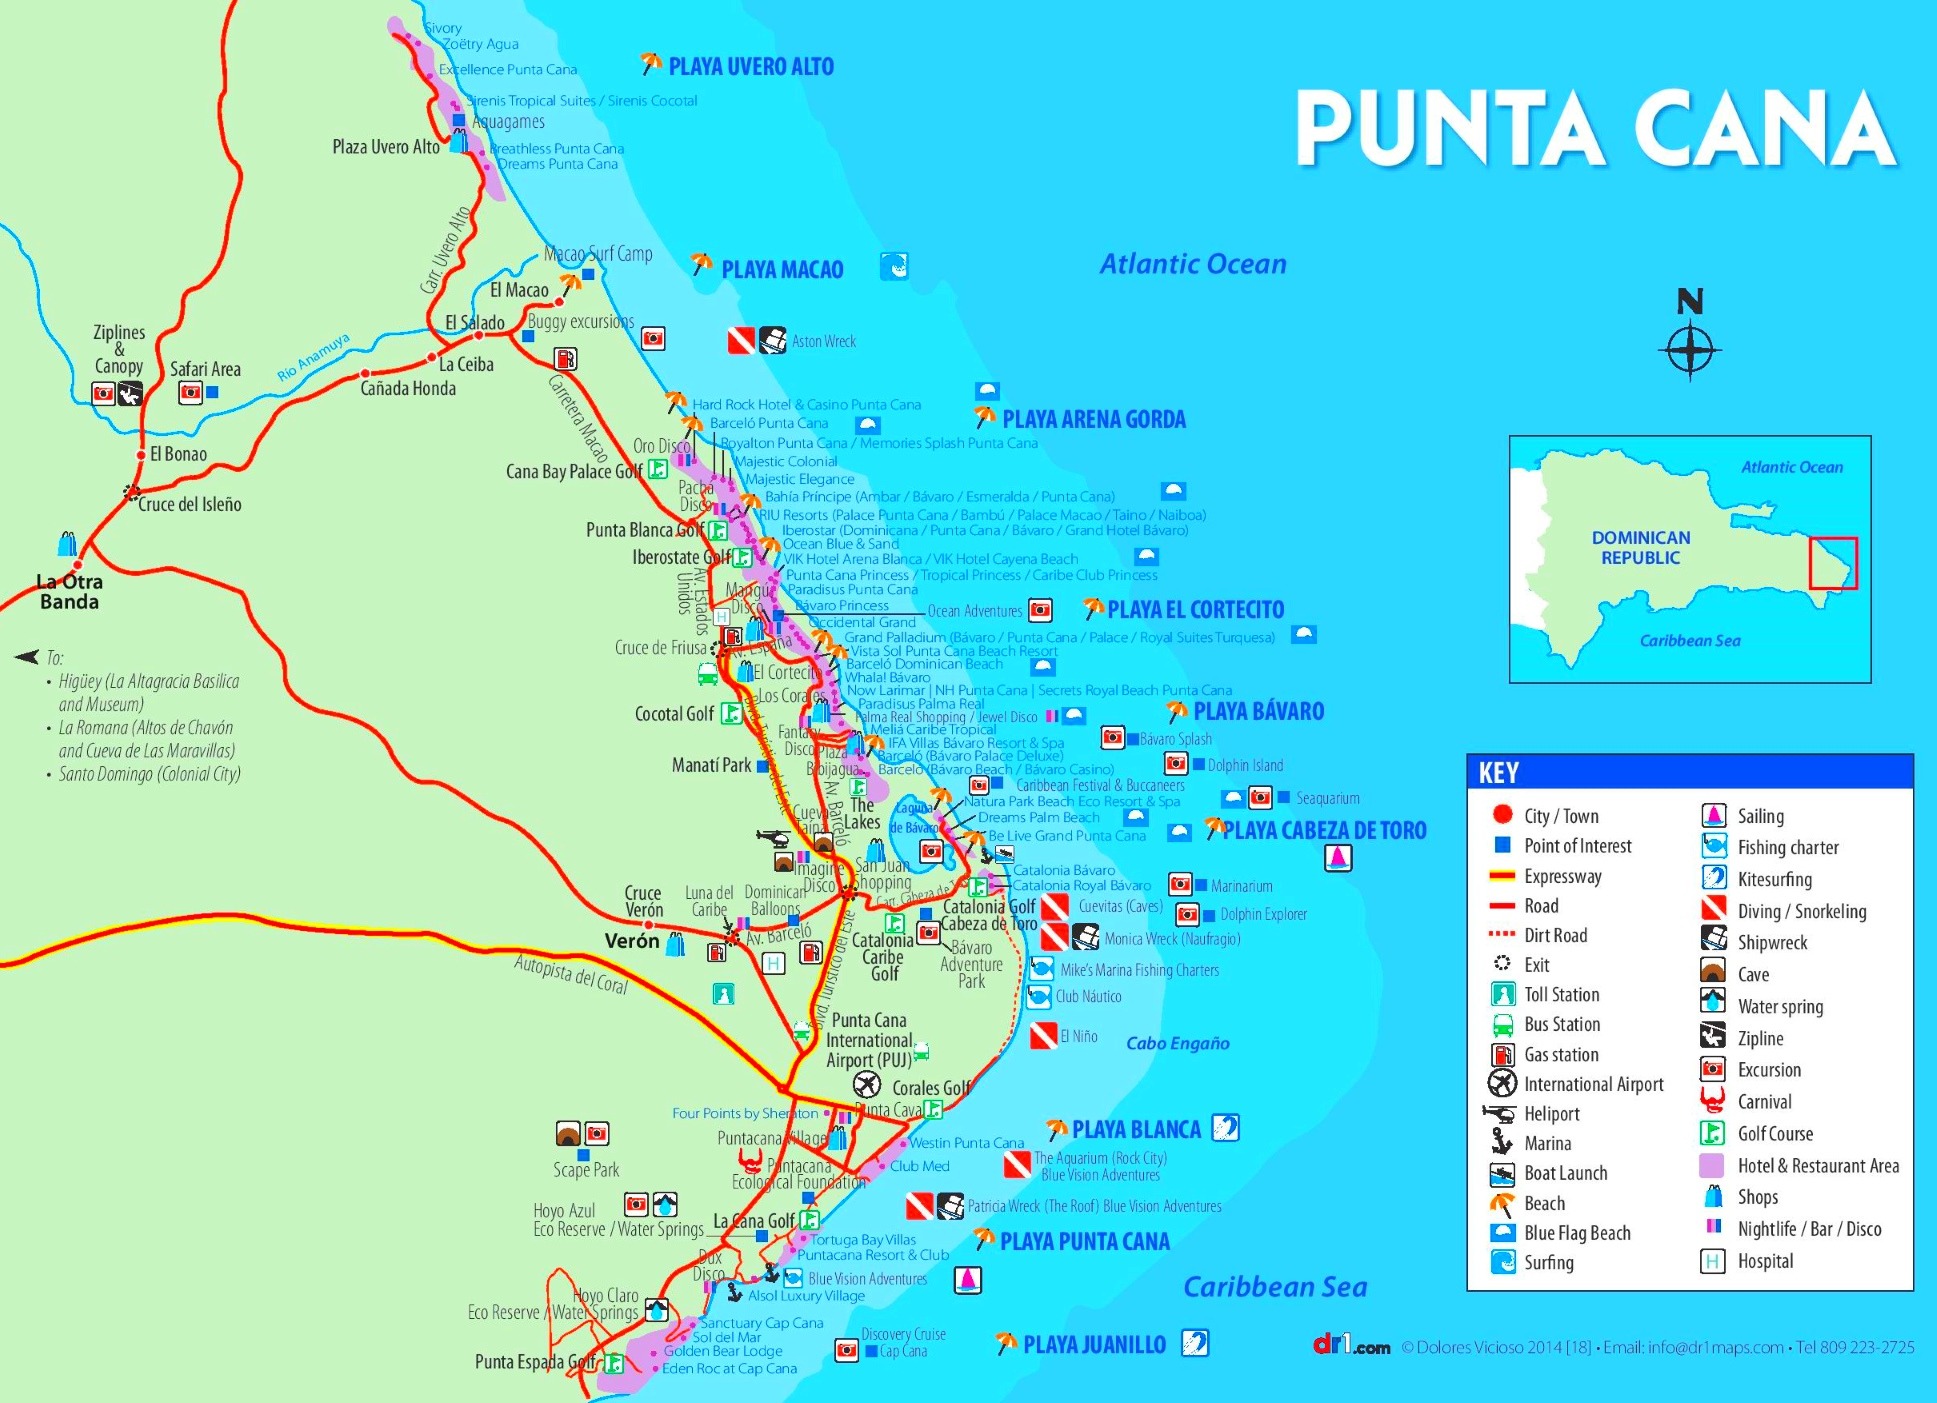 map of punta cana